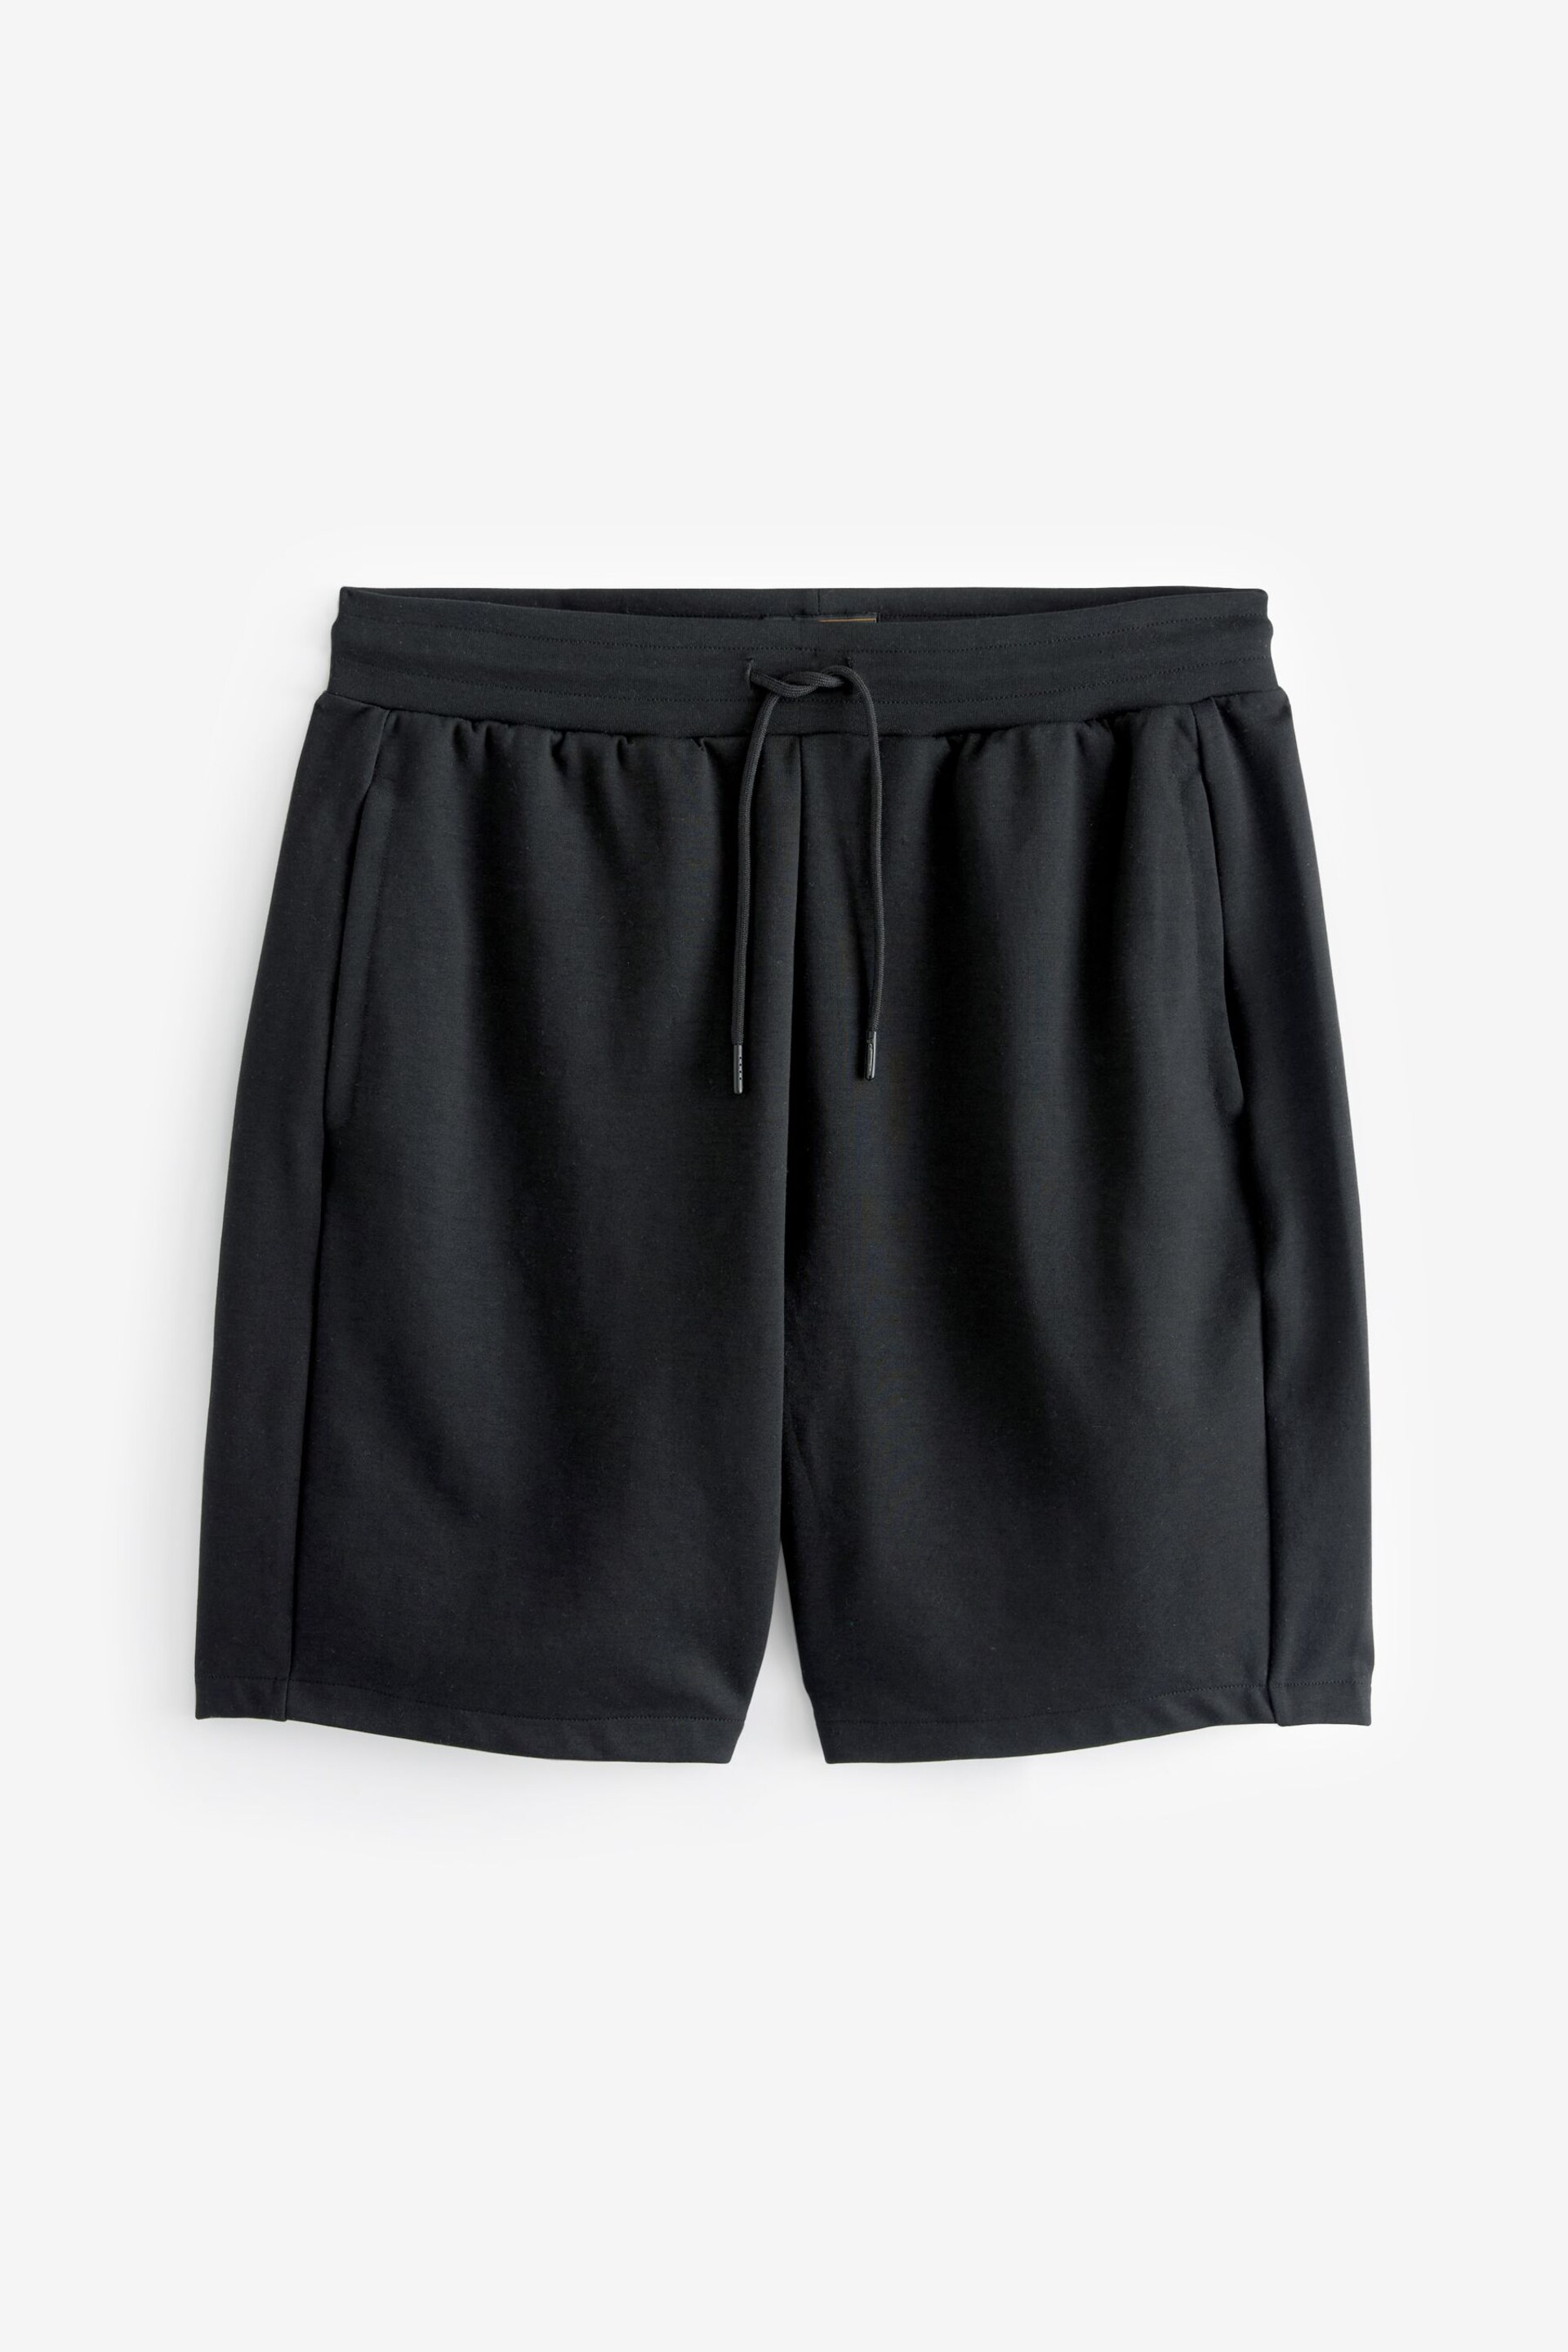 Black/Grey 2 Pack Zip Pocket Jersey Shorts - Image 11 of 14